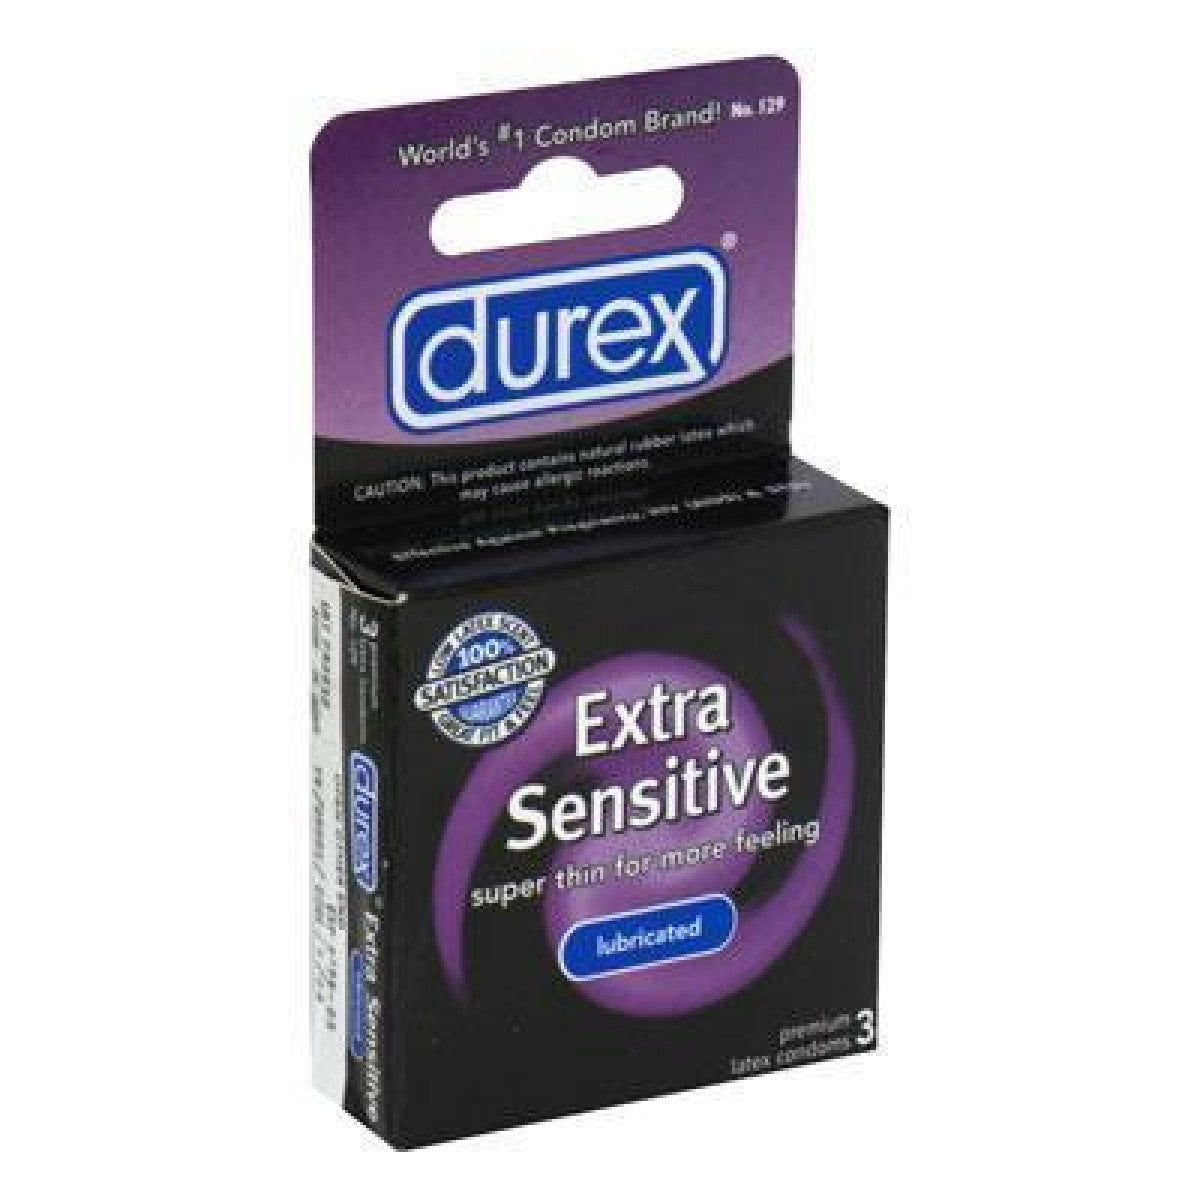 Durex Extra Sensitive Lubricated 3pk Intimates Adult Boutique